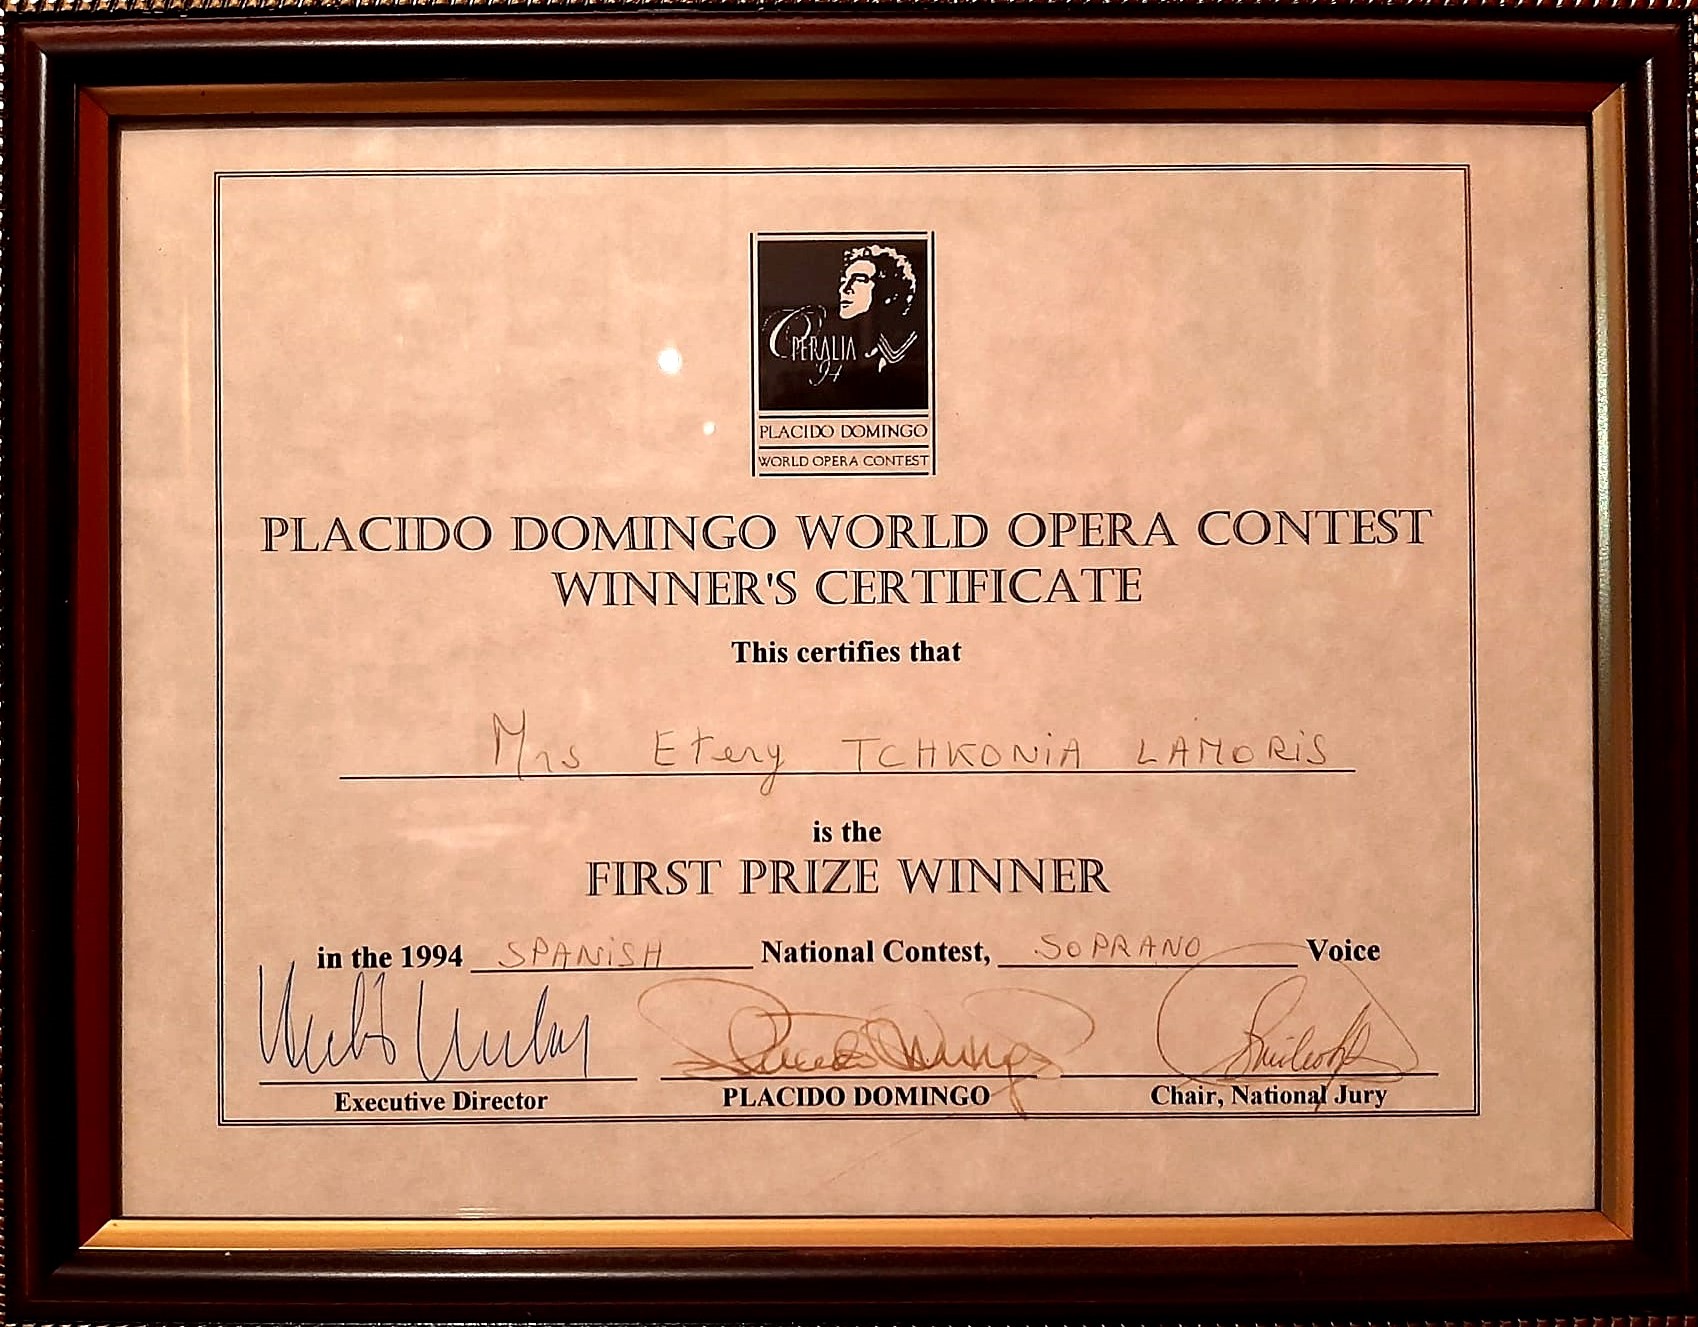 Winner's Certificate for Eteri Lamoris - Placido Domingo World Opera Contest - First Prize Winner (1994)